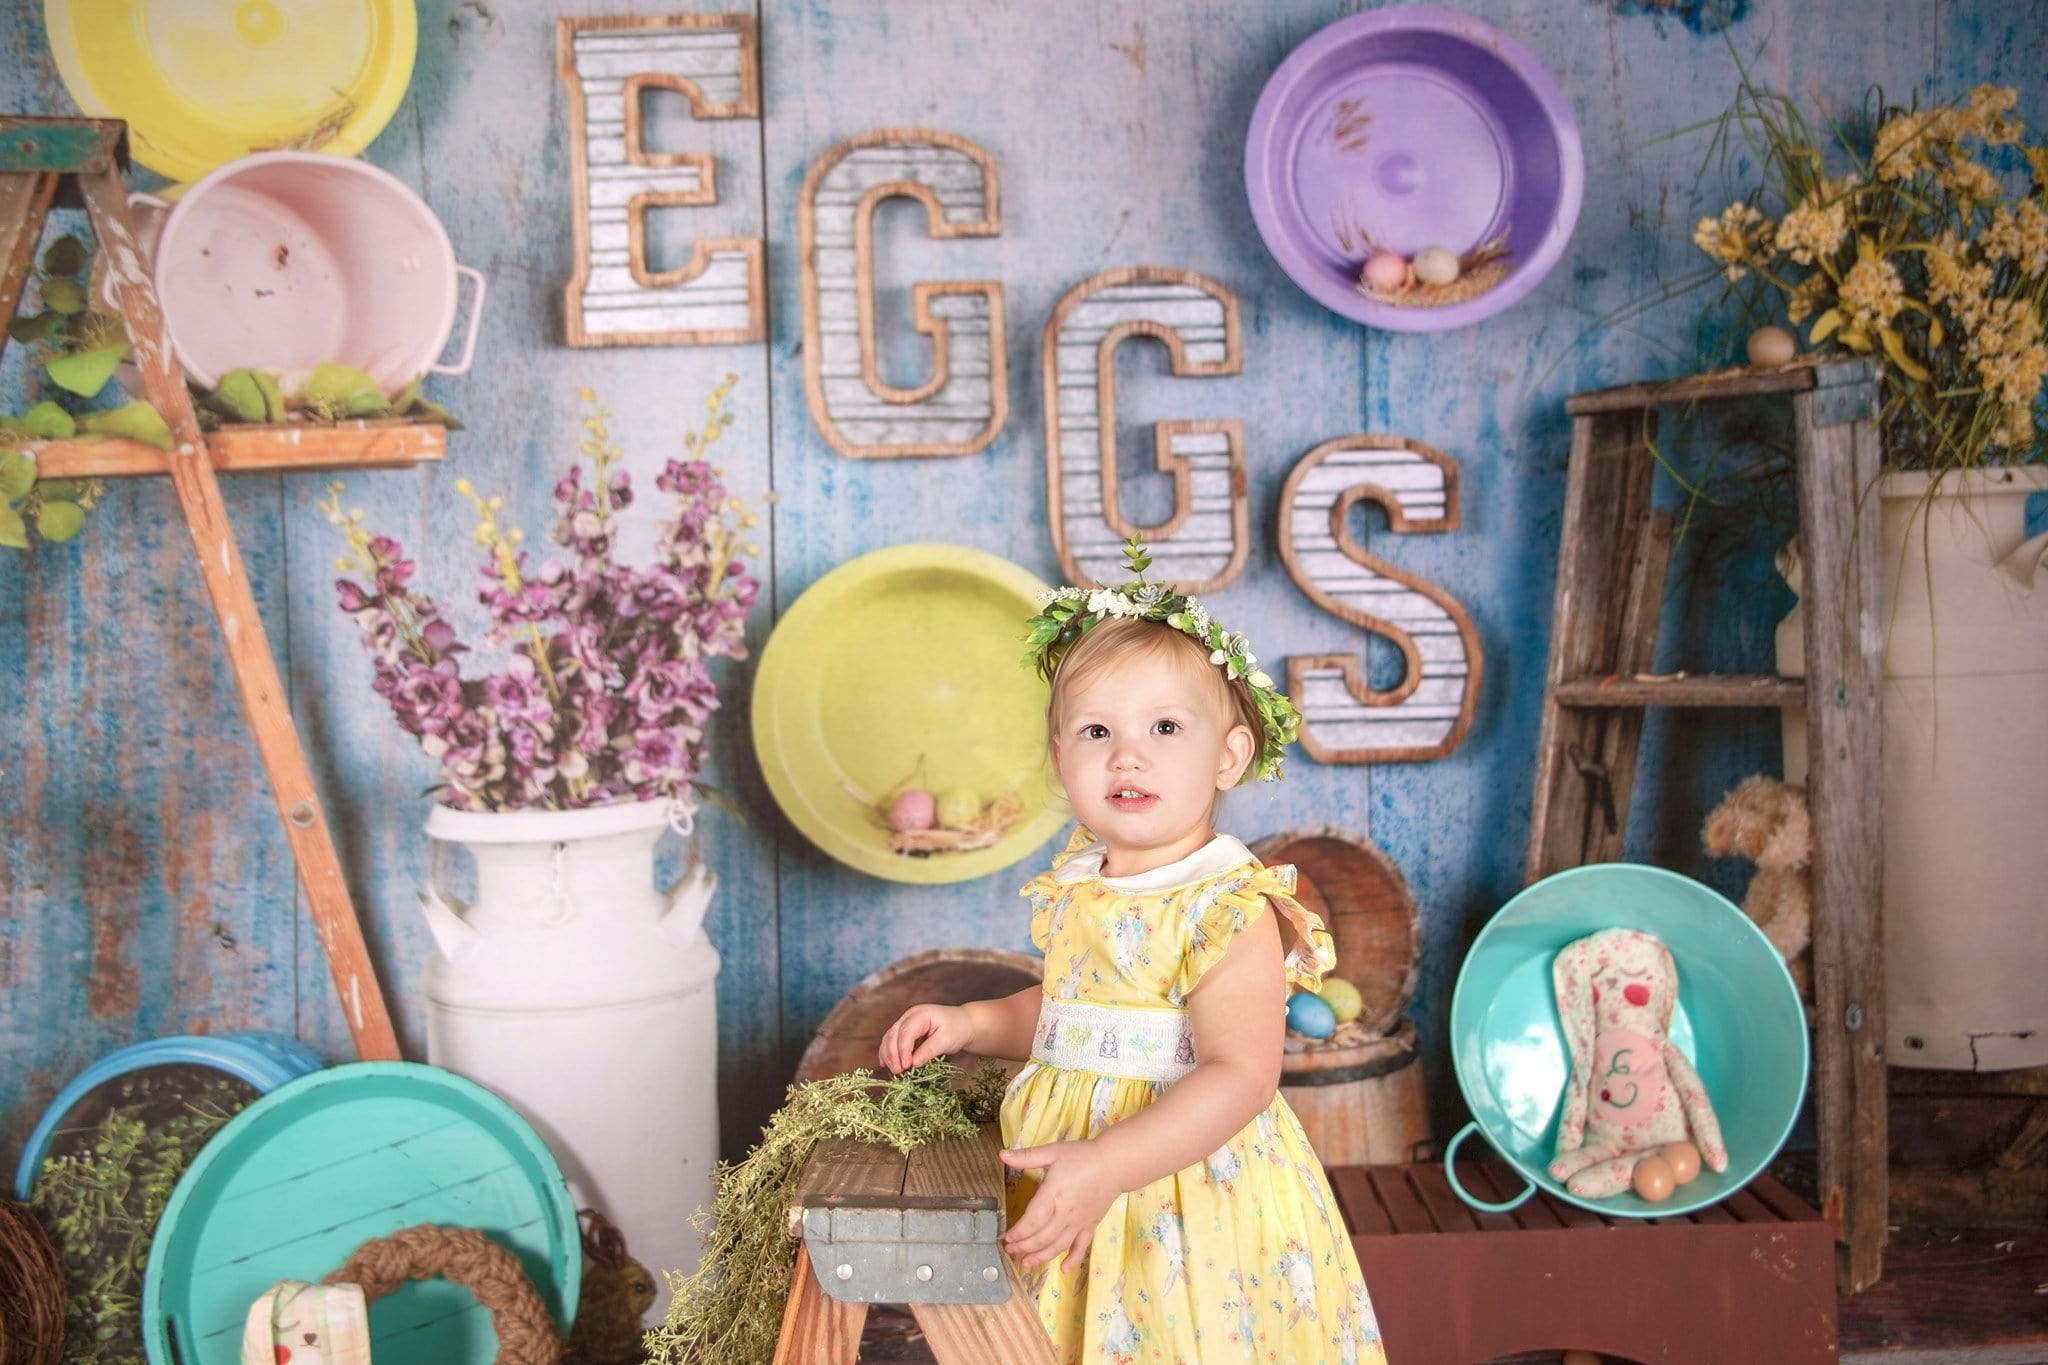 Katebackdrop£ºKate Egg-celent Easter Backdrop designed by Arica Kirby